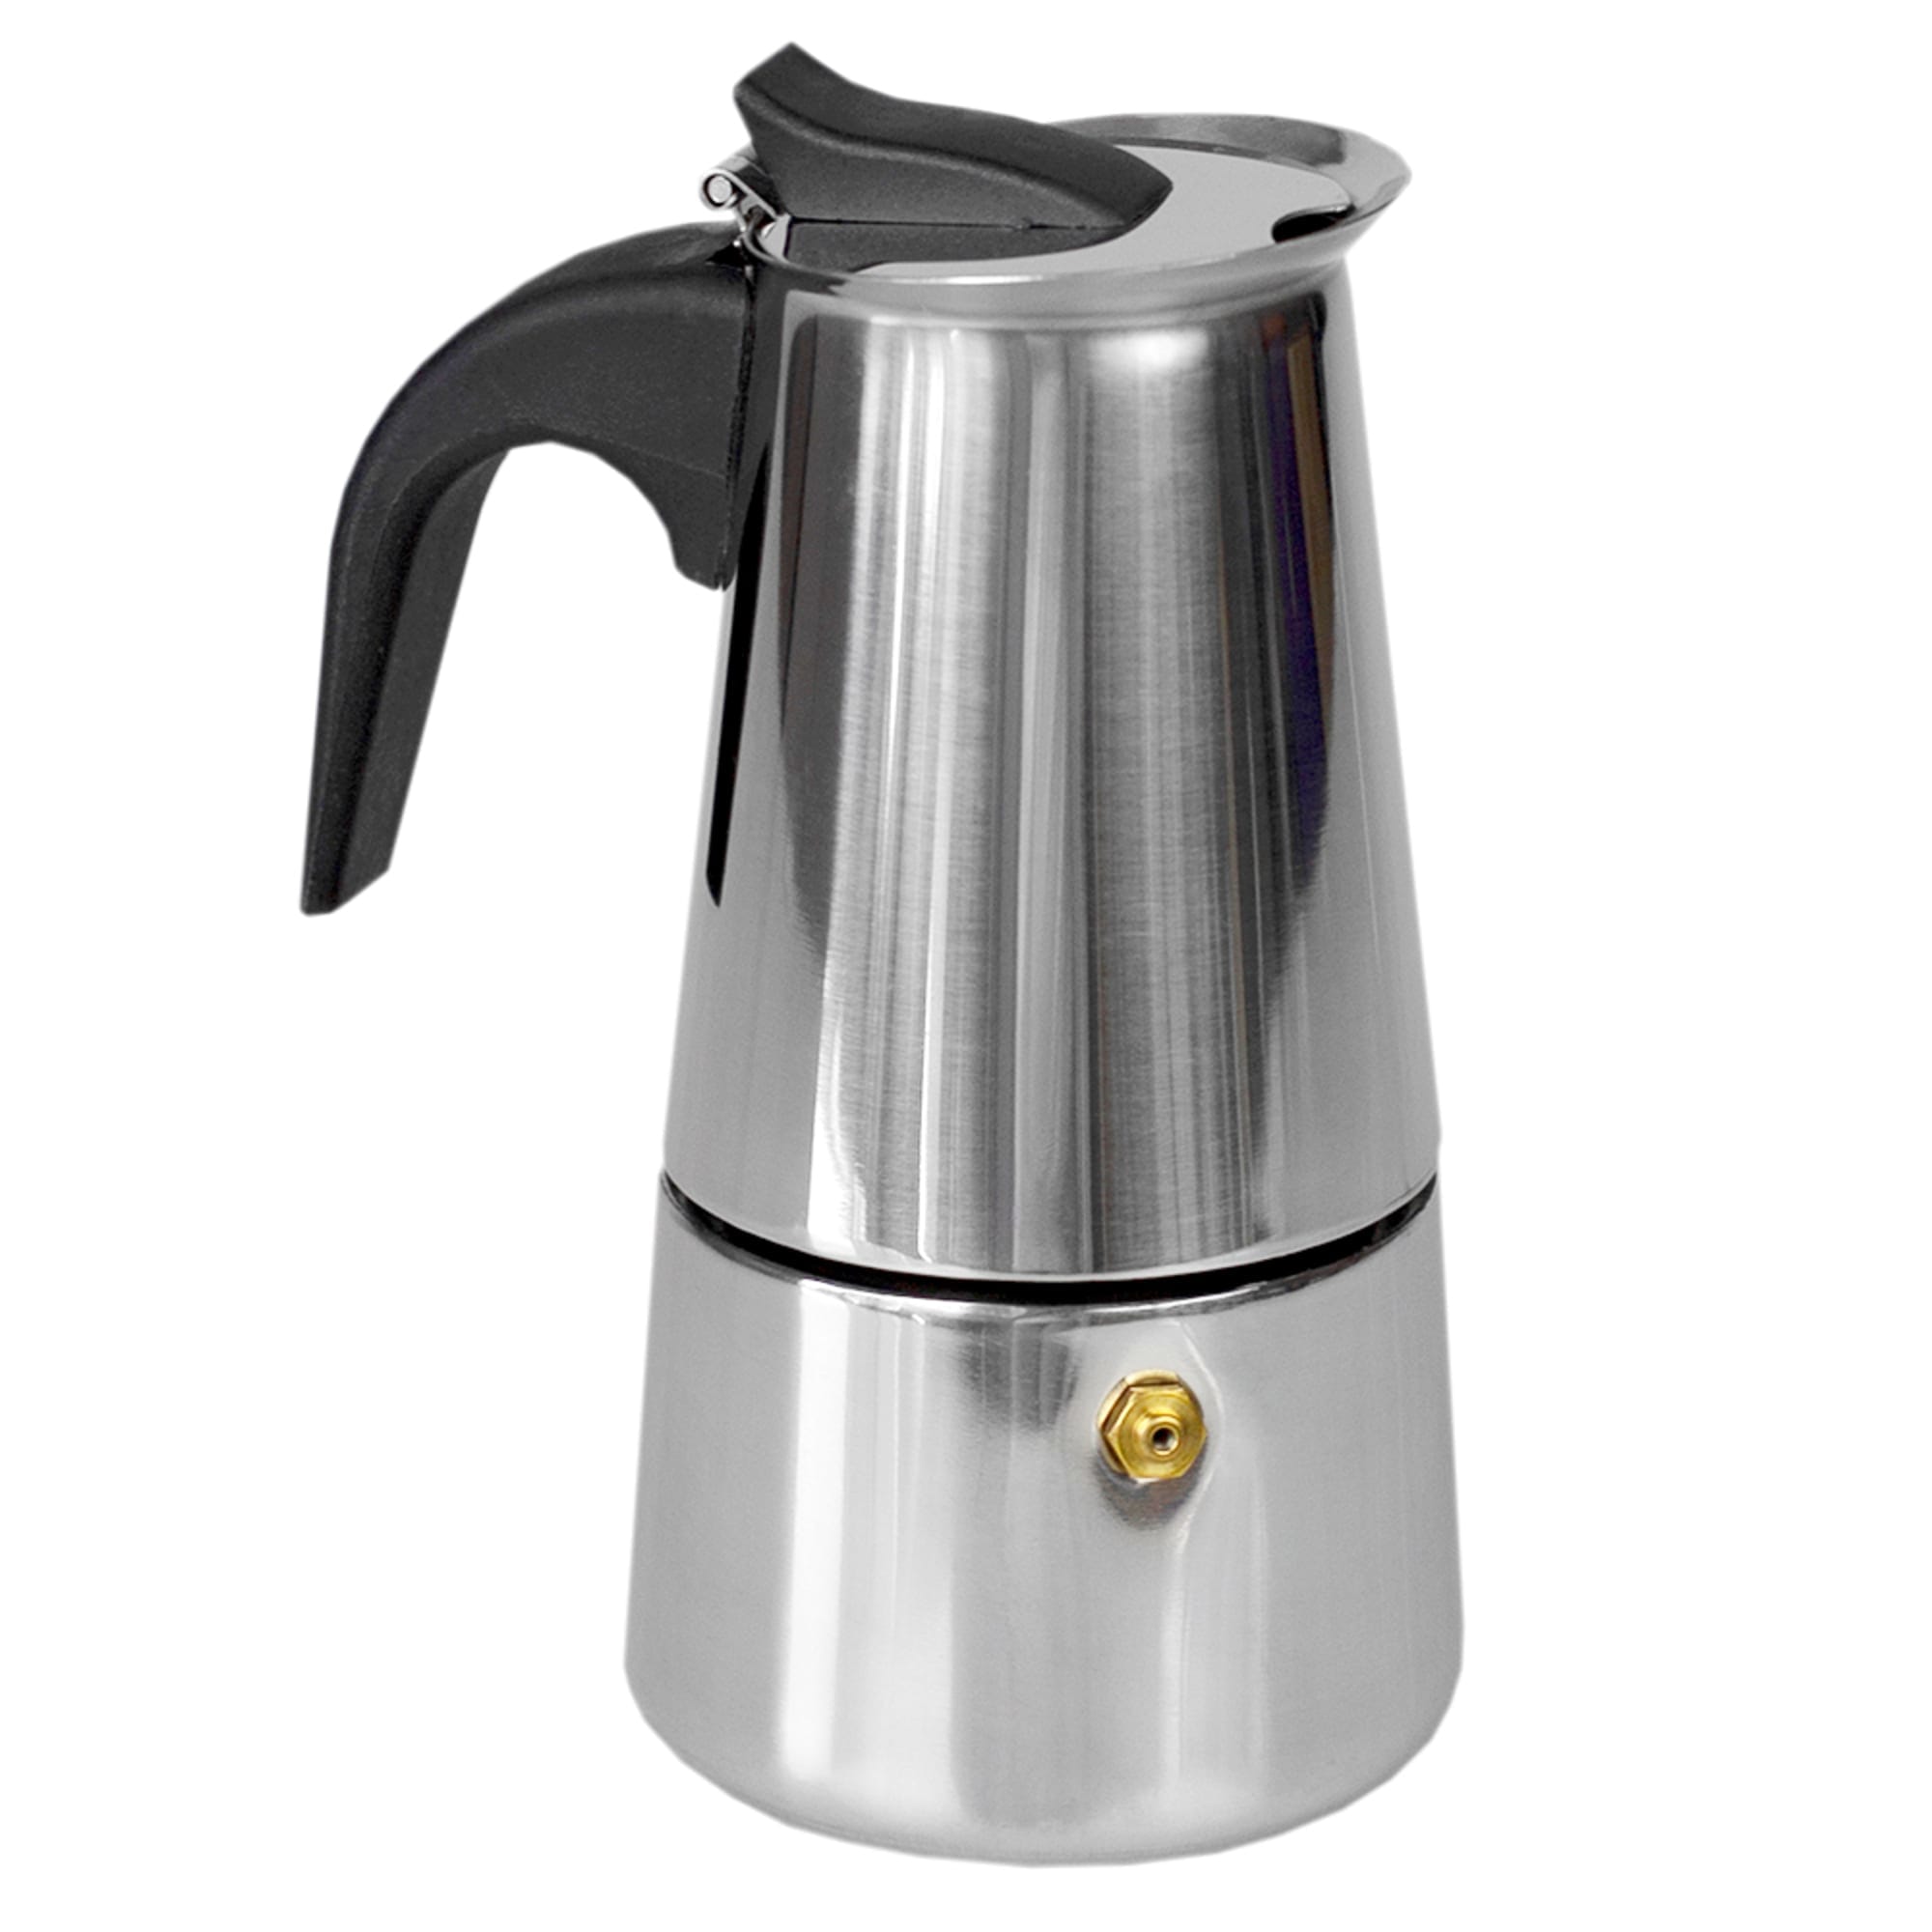 Stainless Steel Stovetop Espresso Coffee Maker Moka Pot Electric 4